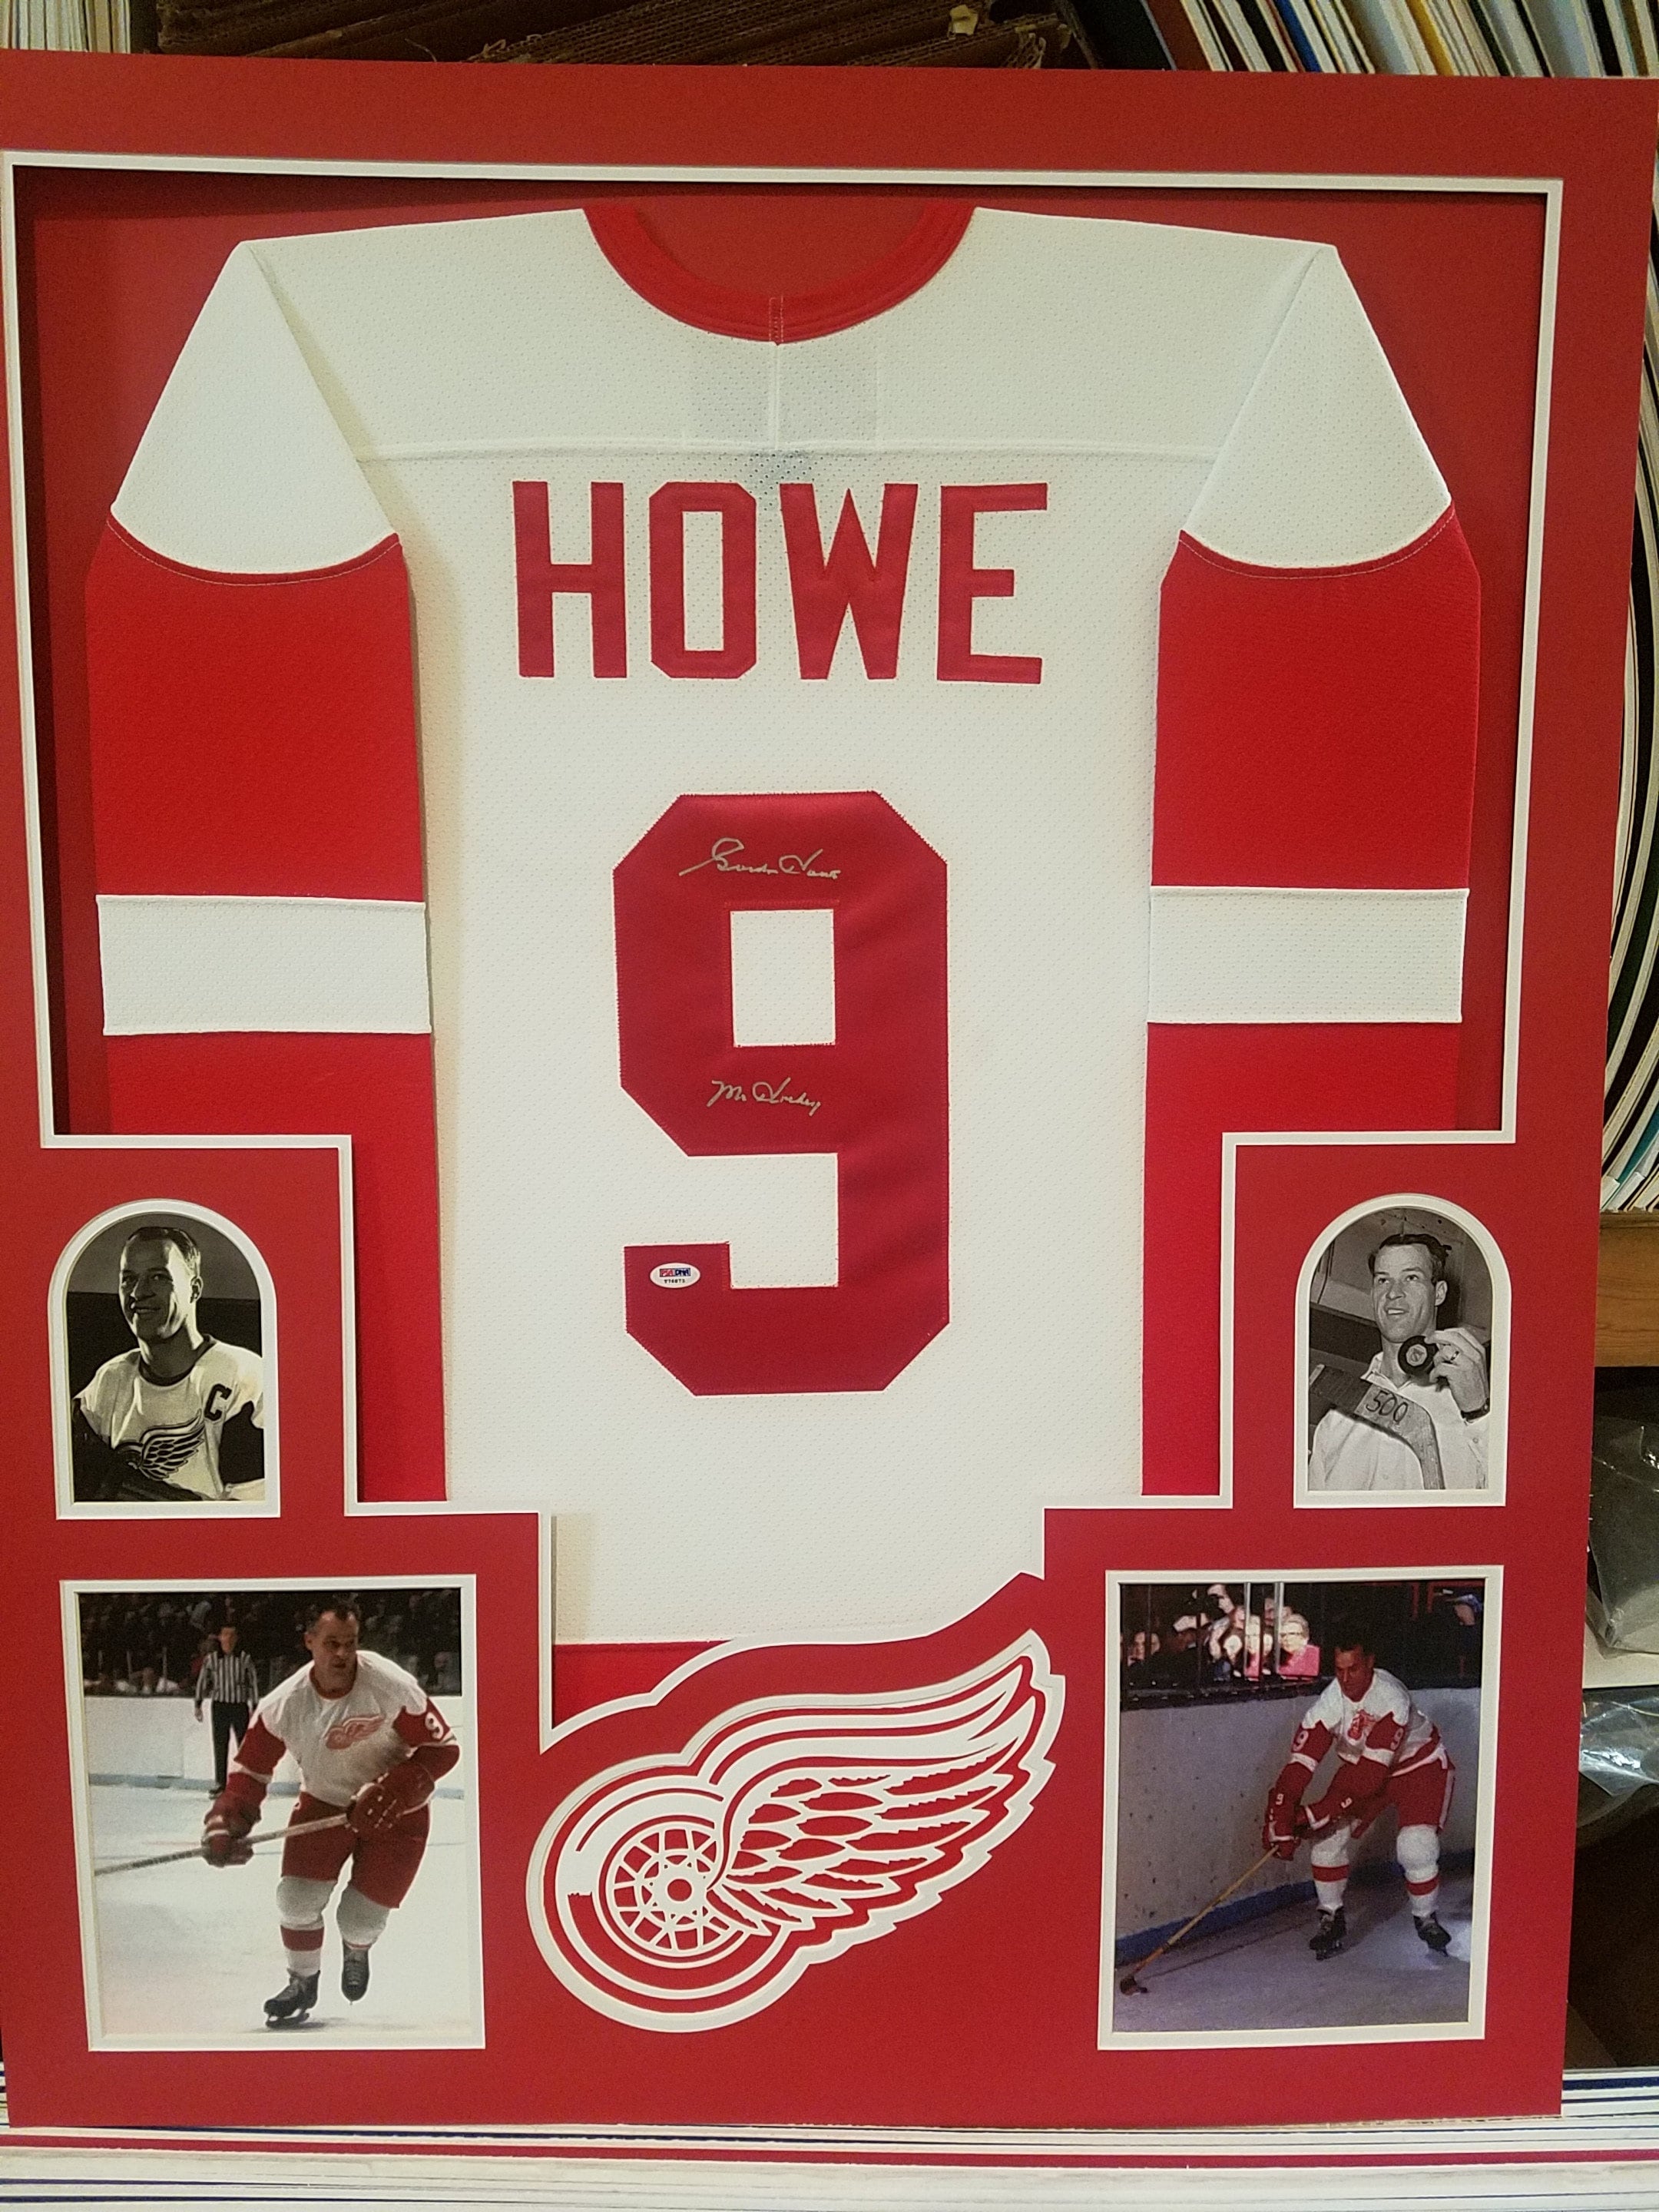 Gordie Howe Autographed Detroit Red Wings Framed Hockey Jersey